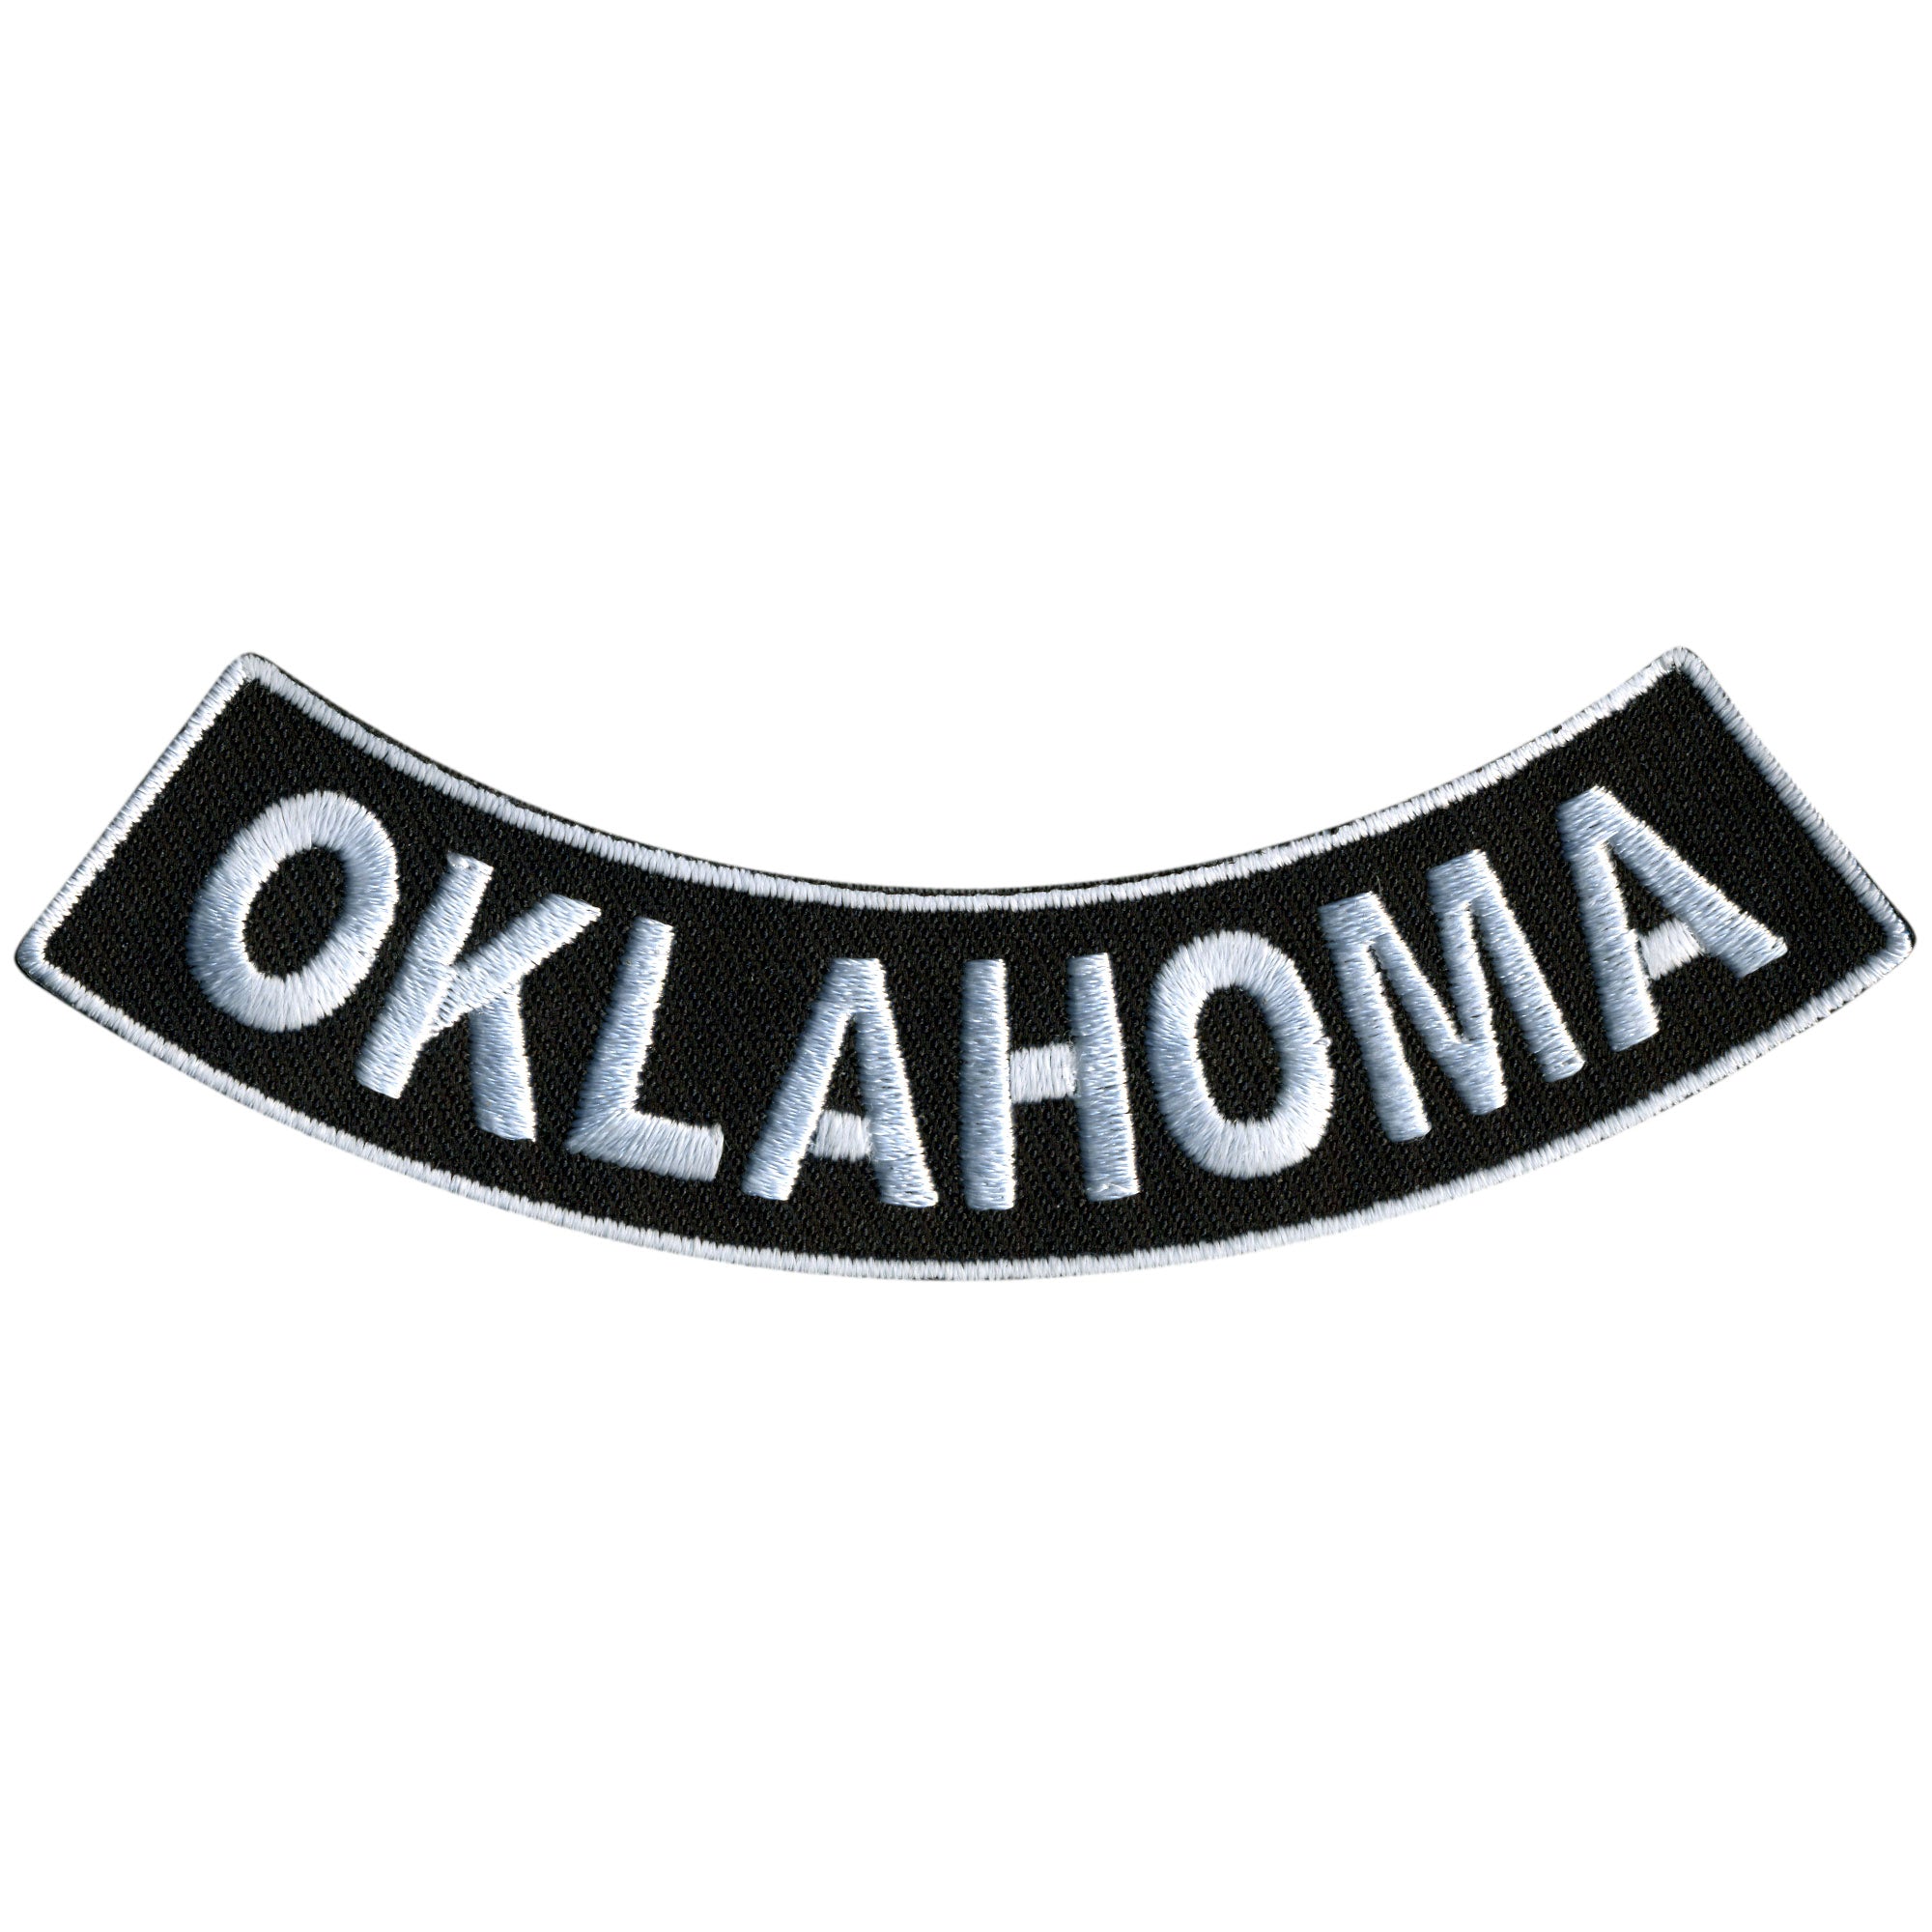 Hot Leathers Oklahoma 4” X 1” Bottom Rocker Patch